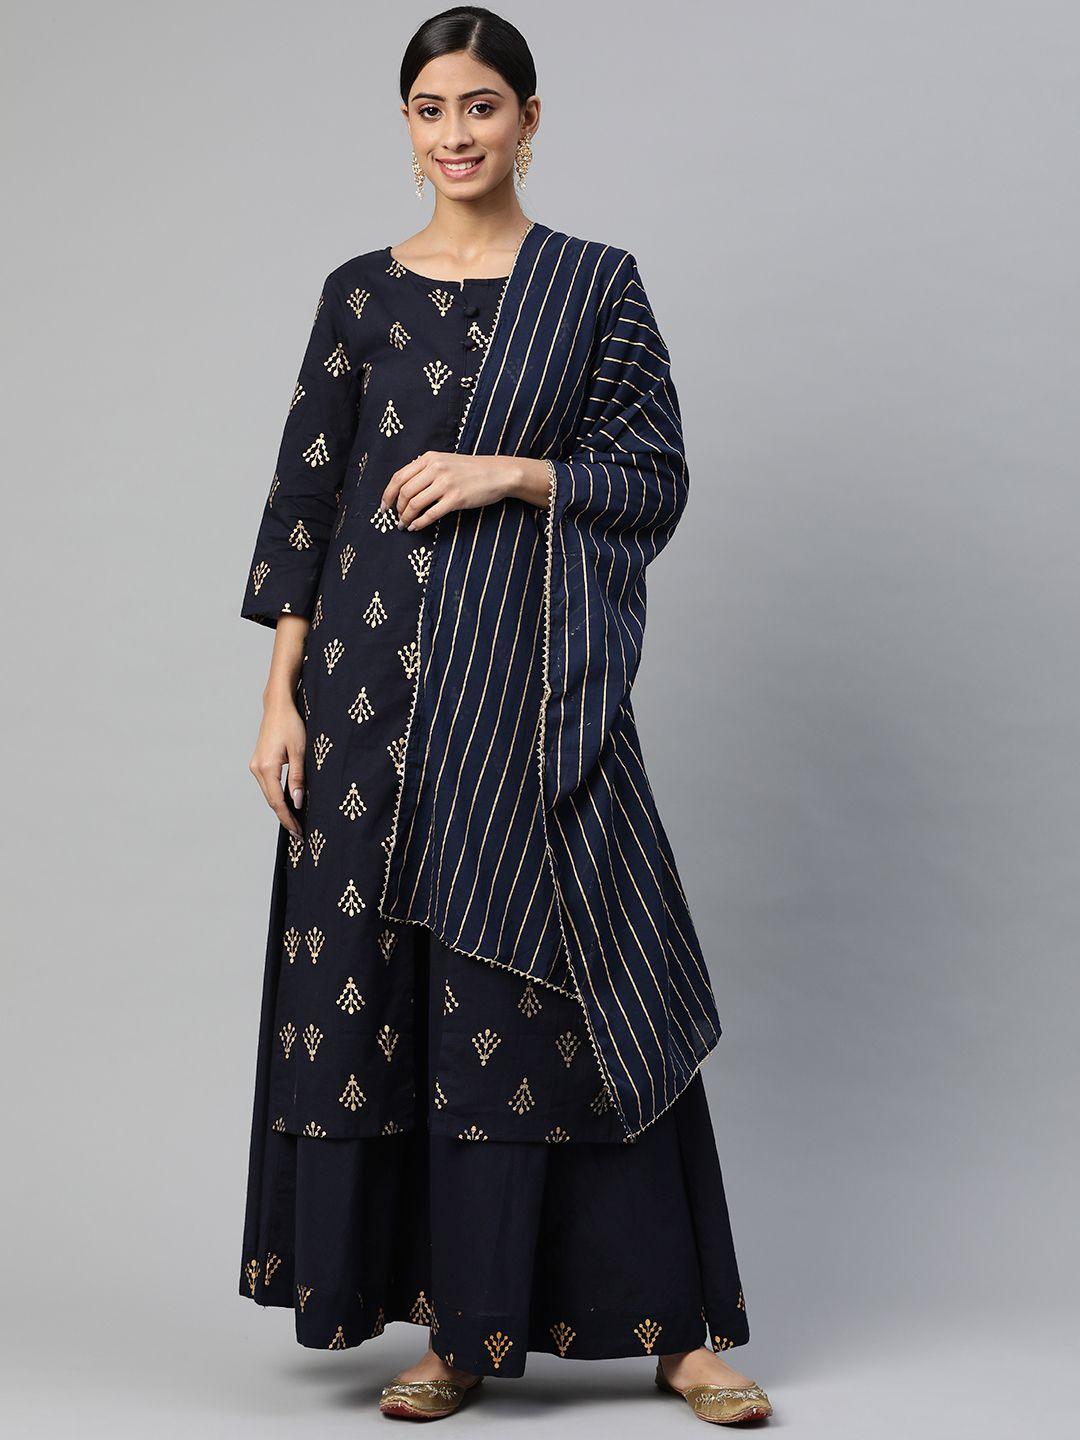 svarchi-women-navy-blue-pure-cotton-ethnic-motifs-printed-kurta-with-skirt-&-with-dupatta